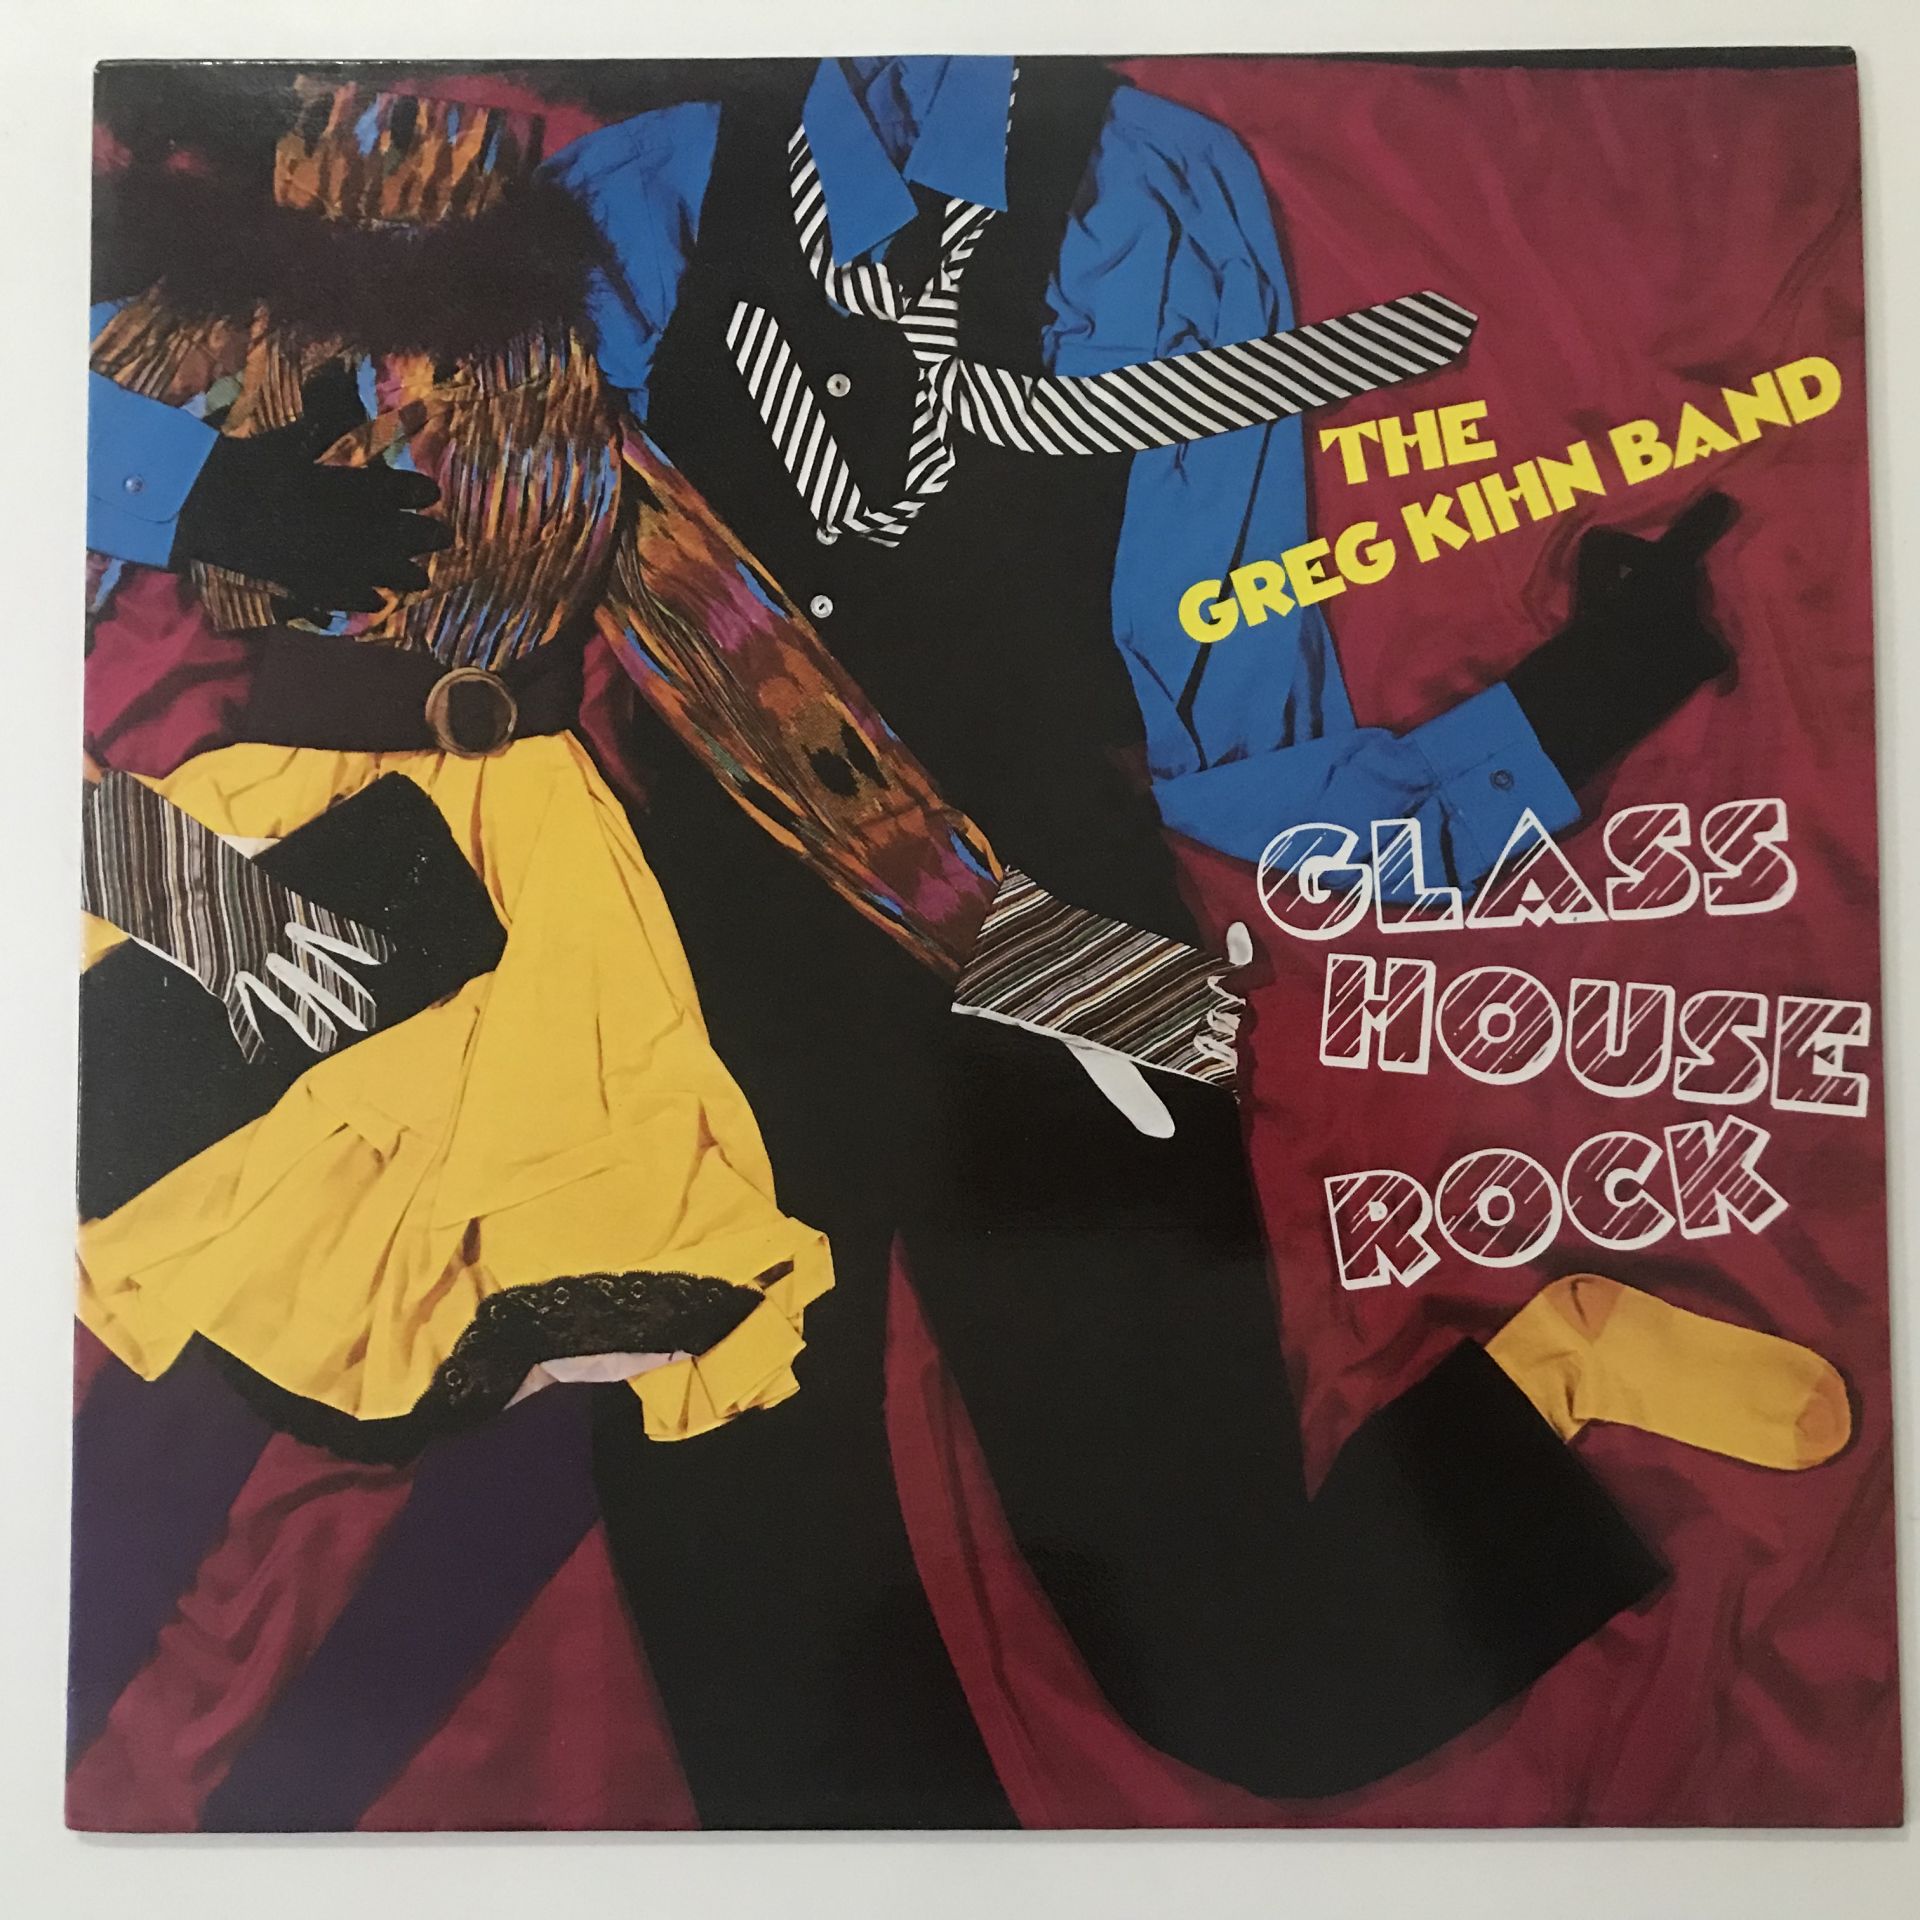 Greg Kihn Band – Glass House Rock